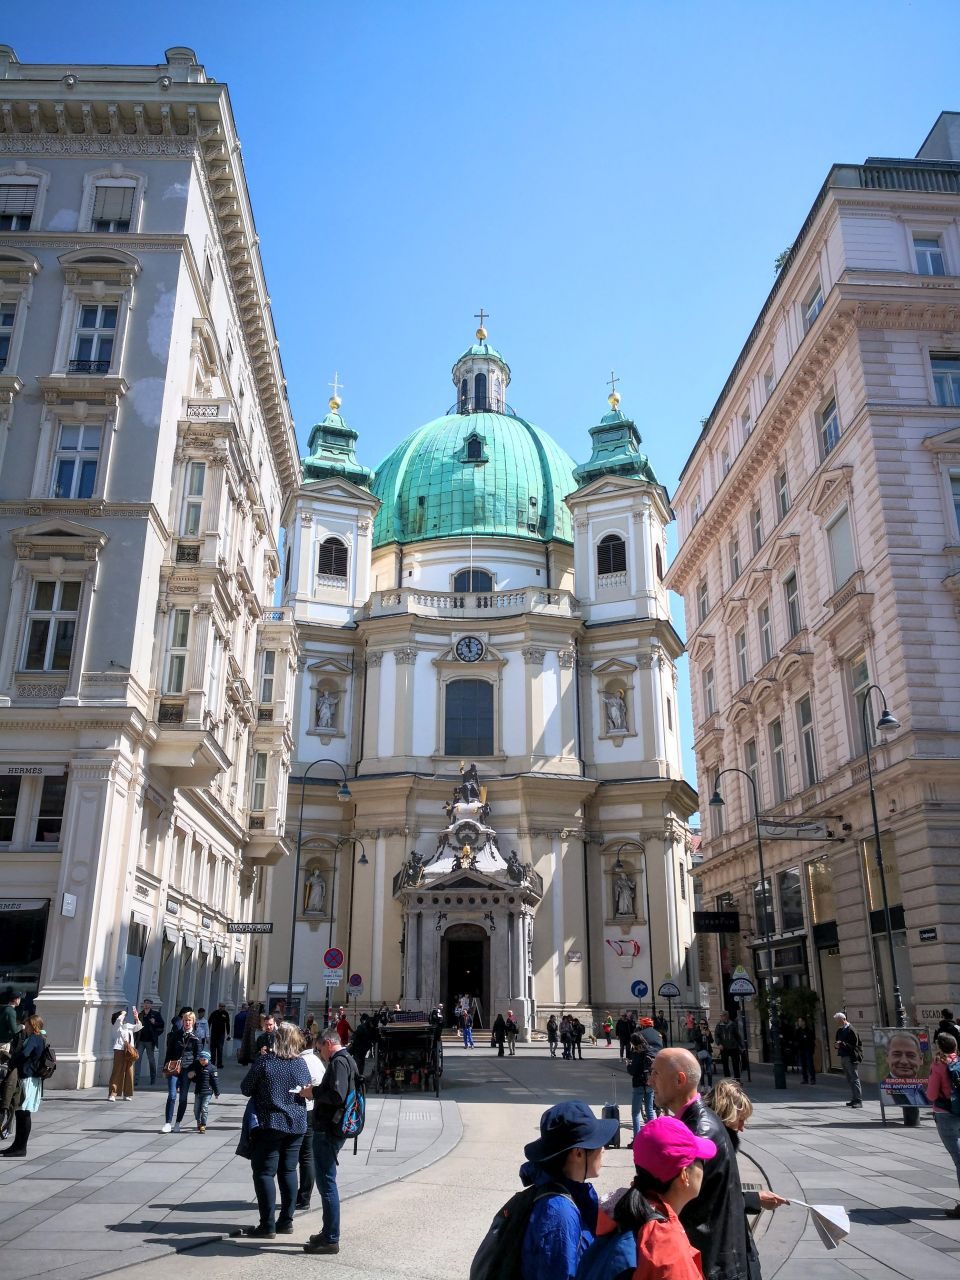 Peterskirche - St. Peter's Church in Vienna